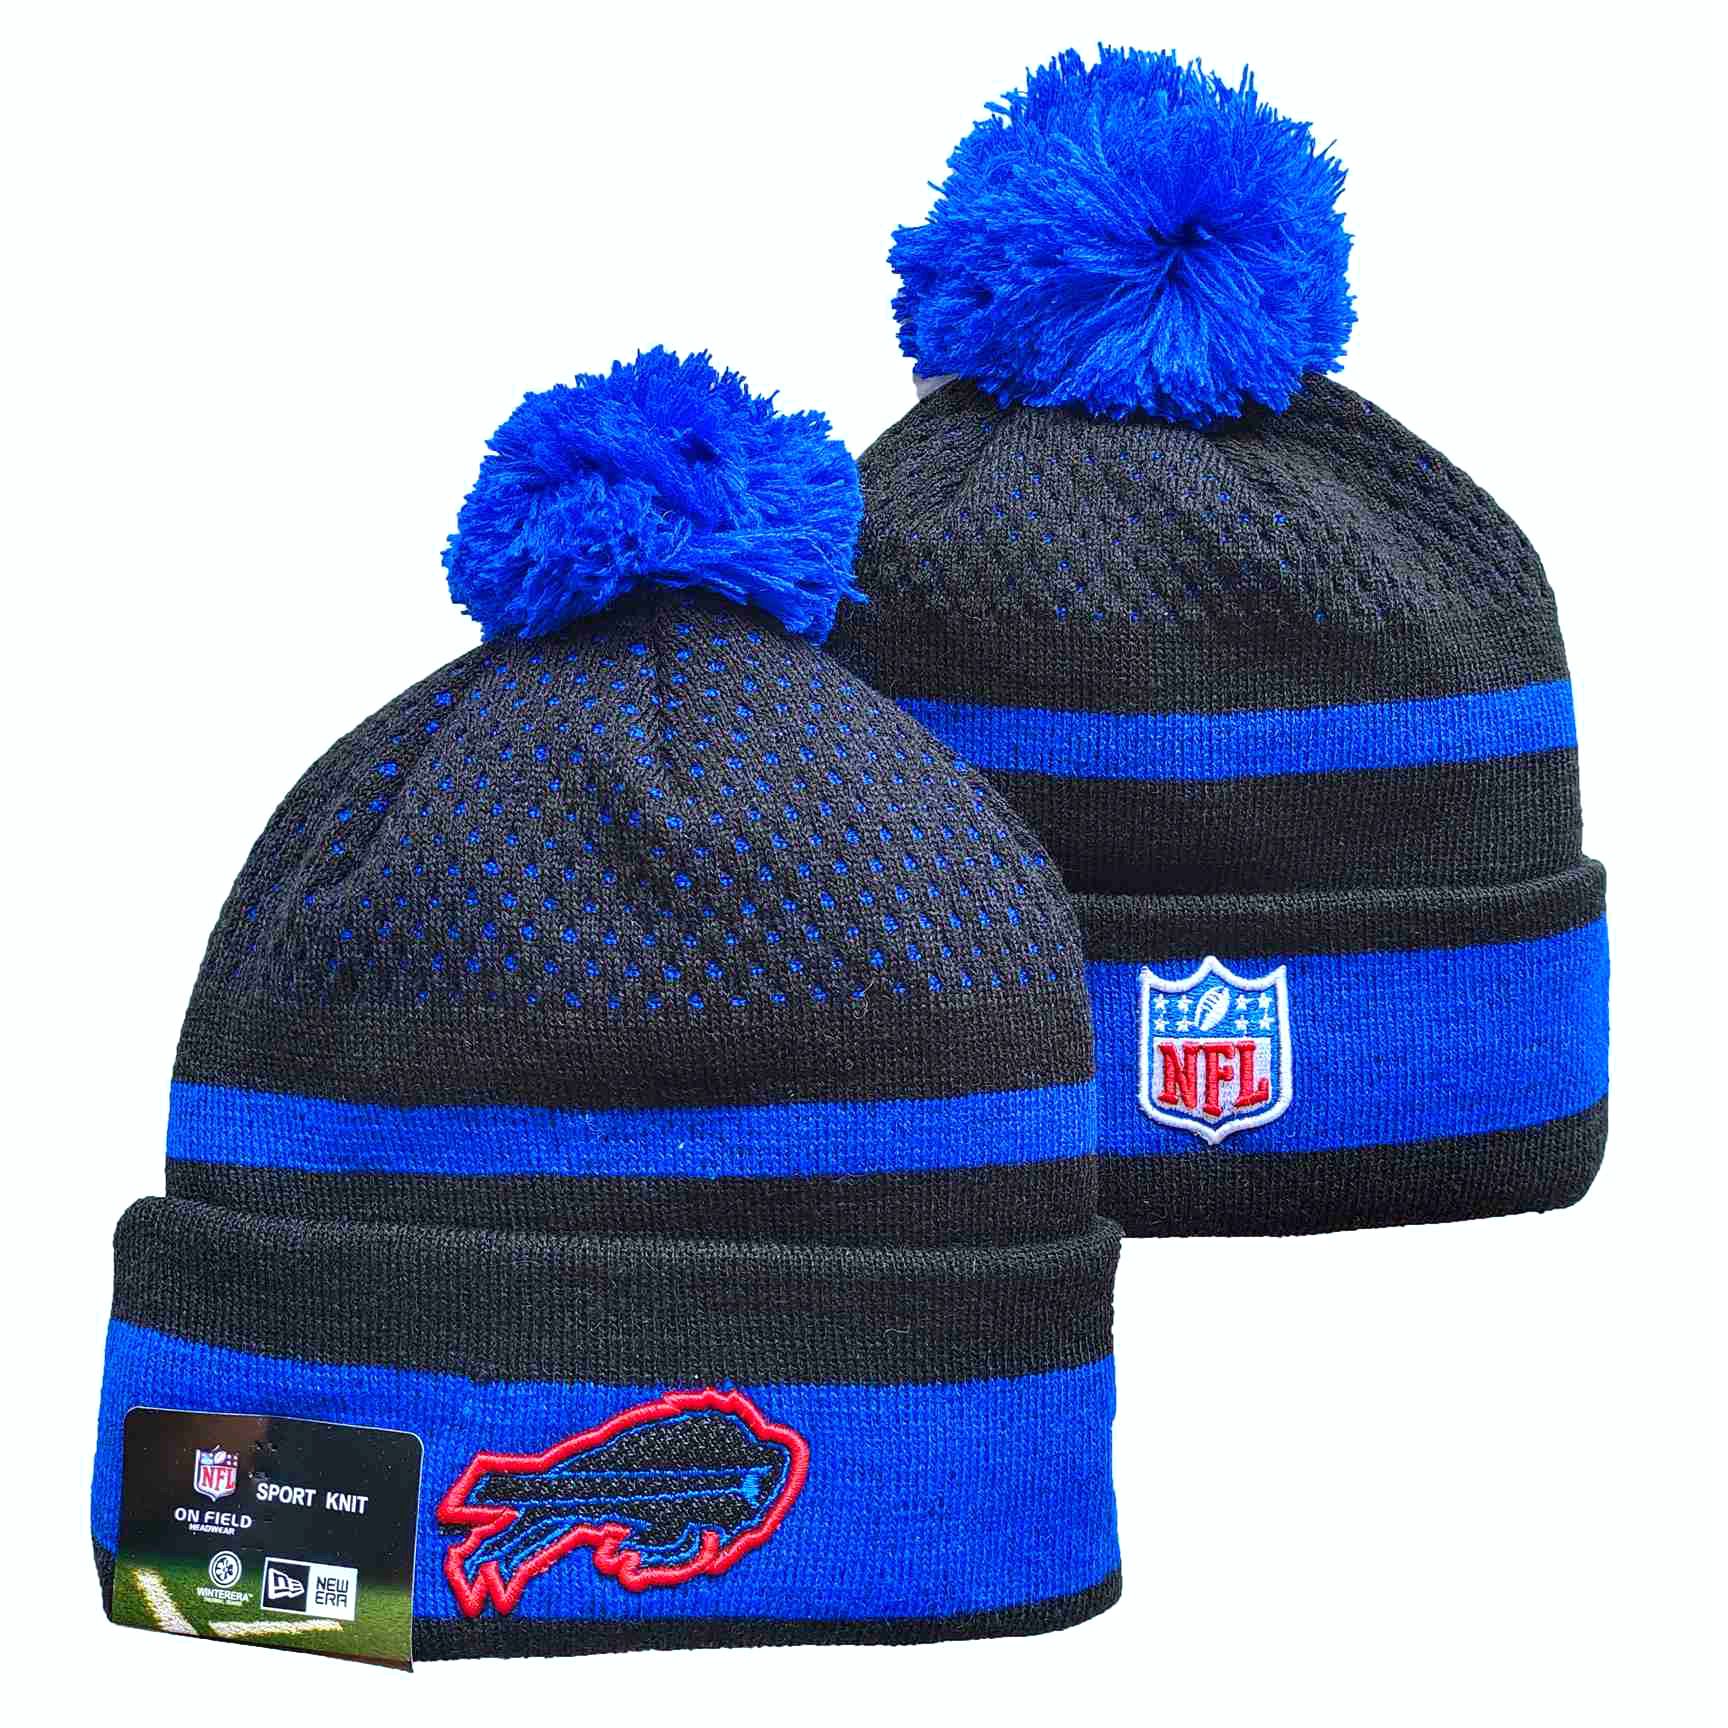 NFL Buffalo Bills Beanies Knit Hats-YD923